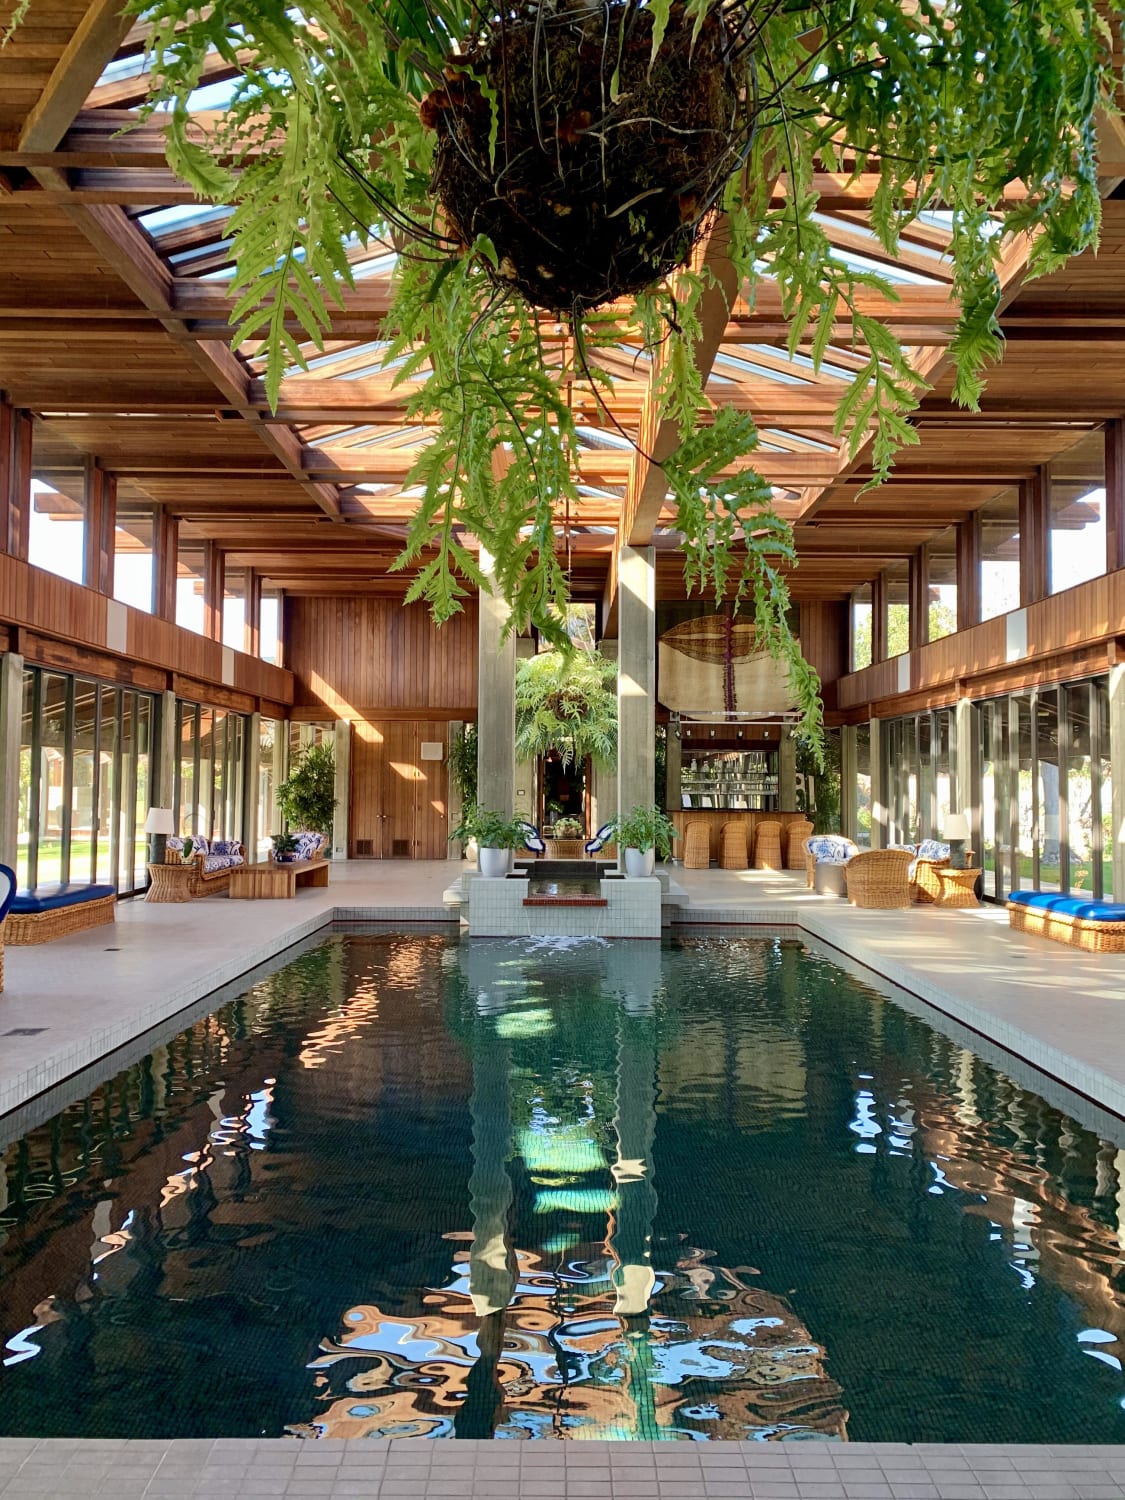 This indoor pool. Rancho Santa Fe, CA. My photo.